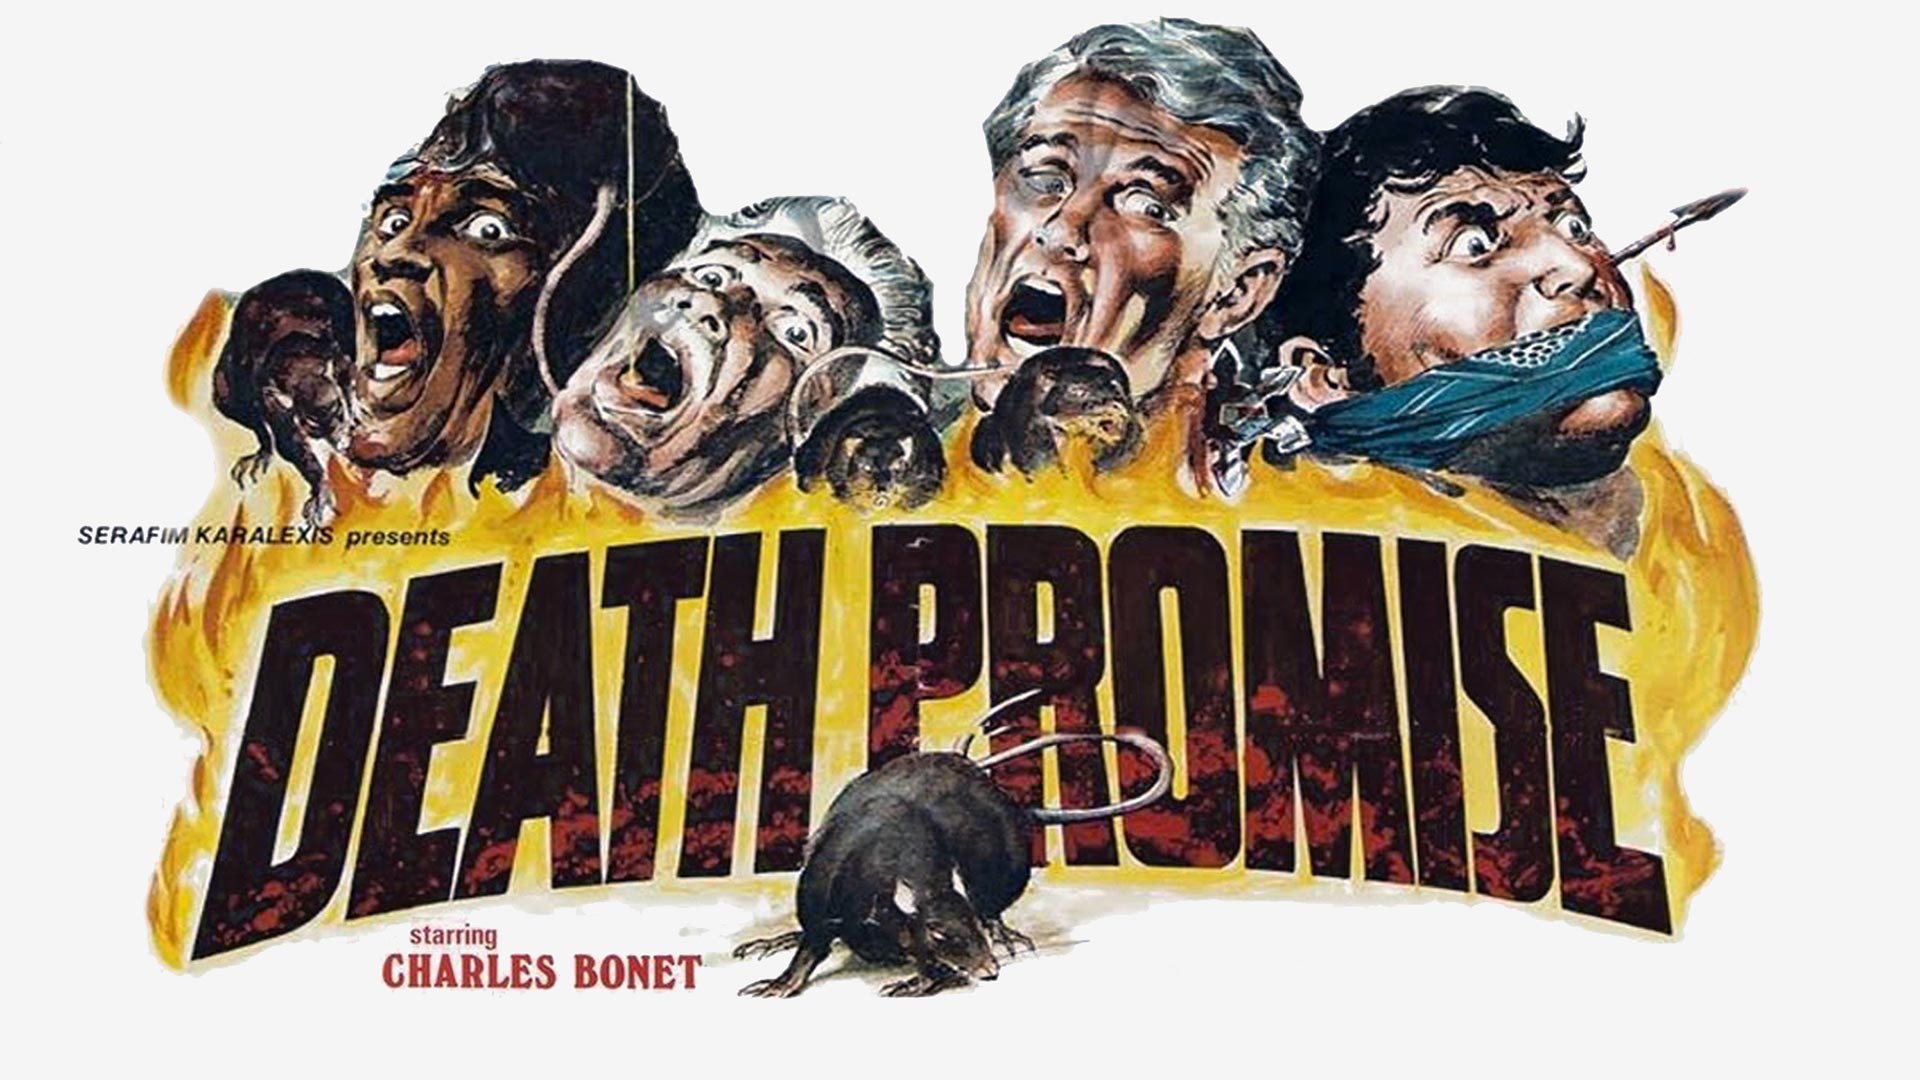 Death Promise